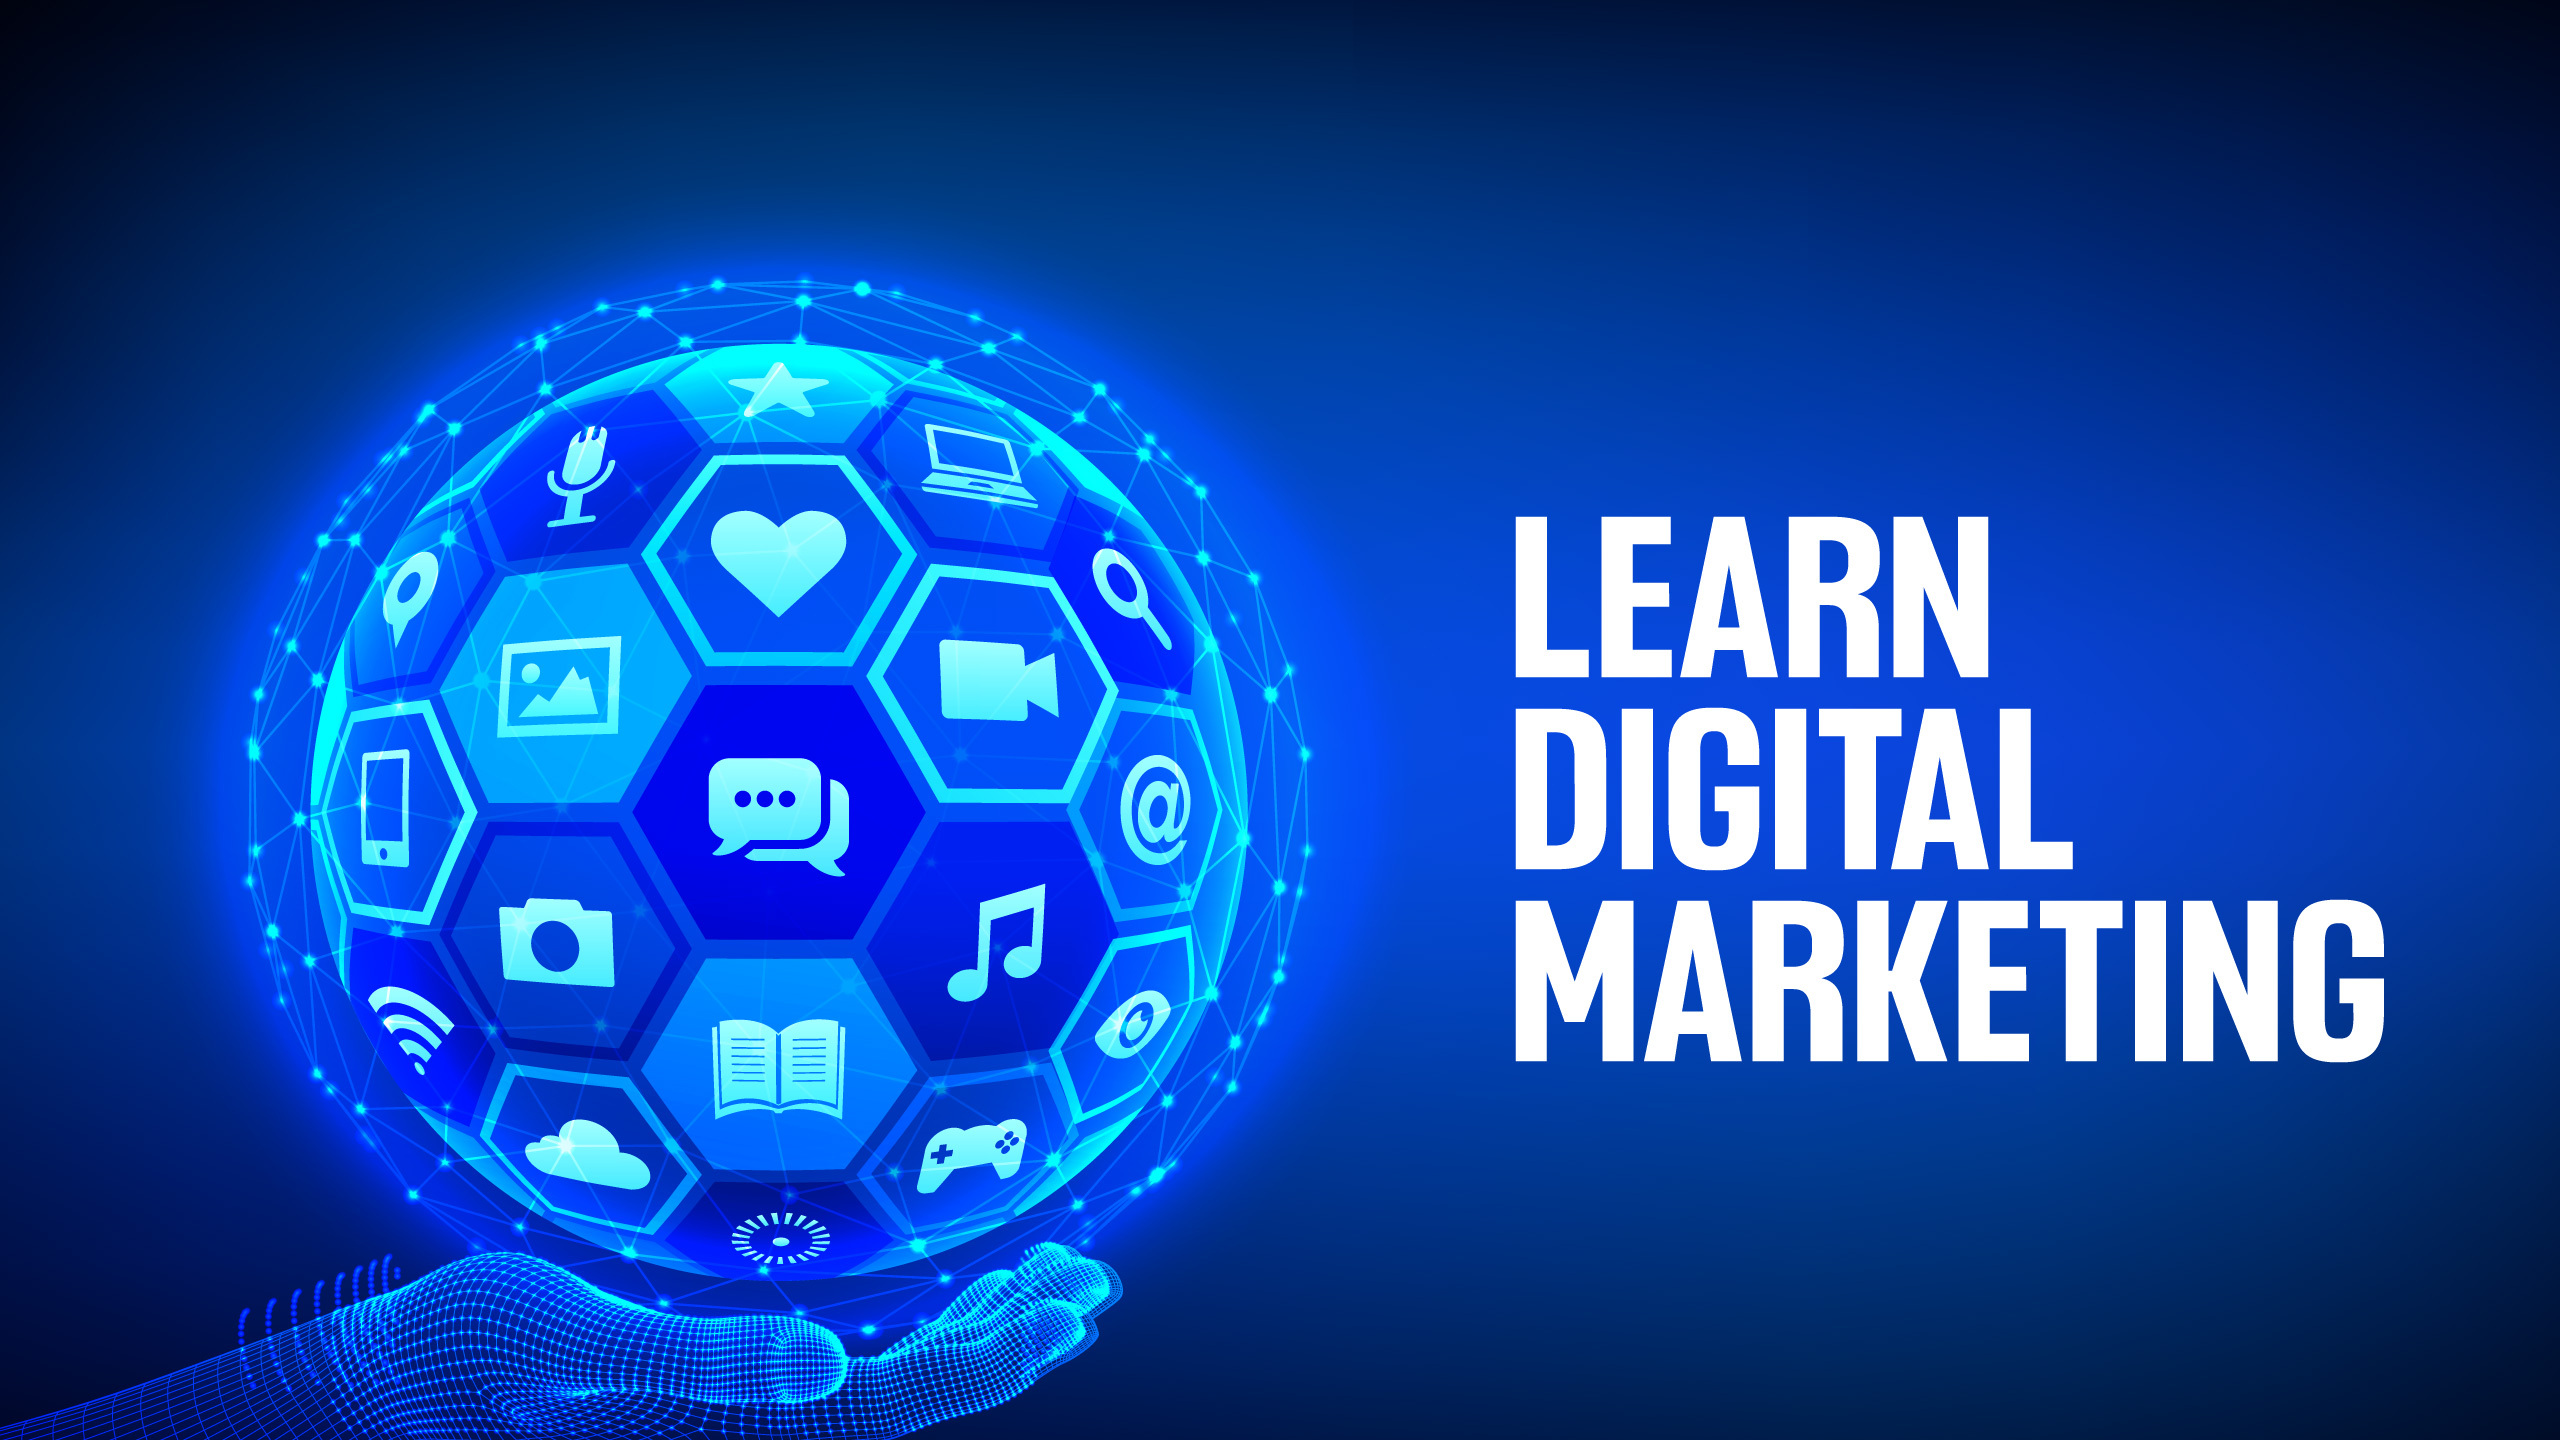 Learn Digital Marketing Basics- Free Course